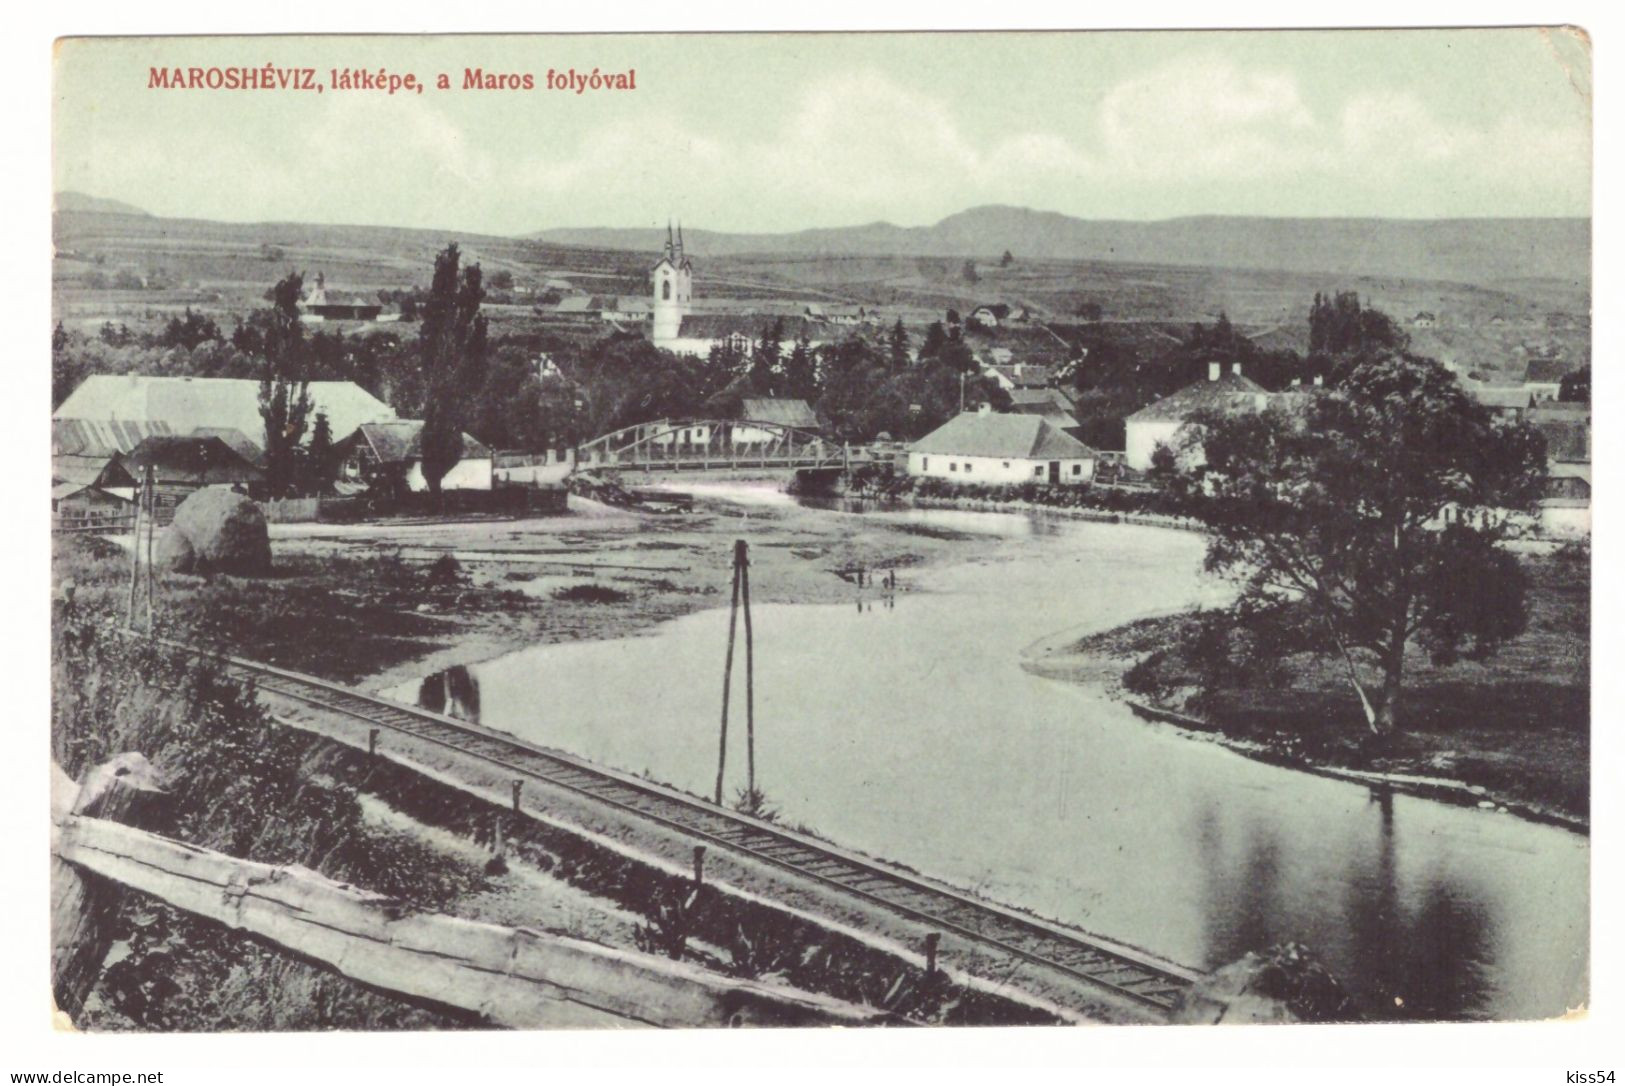 RO 91 - 18375 TOPLITA, Harghita, Railway, Bridge, Panorama, Romania - Old Postcard - Unused - Rumania